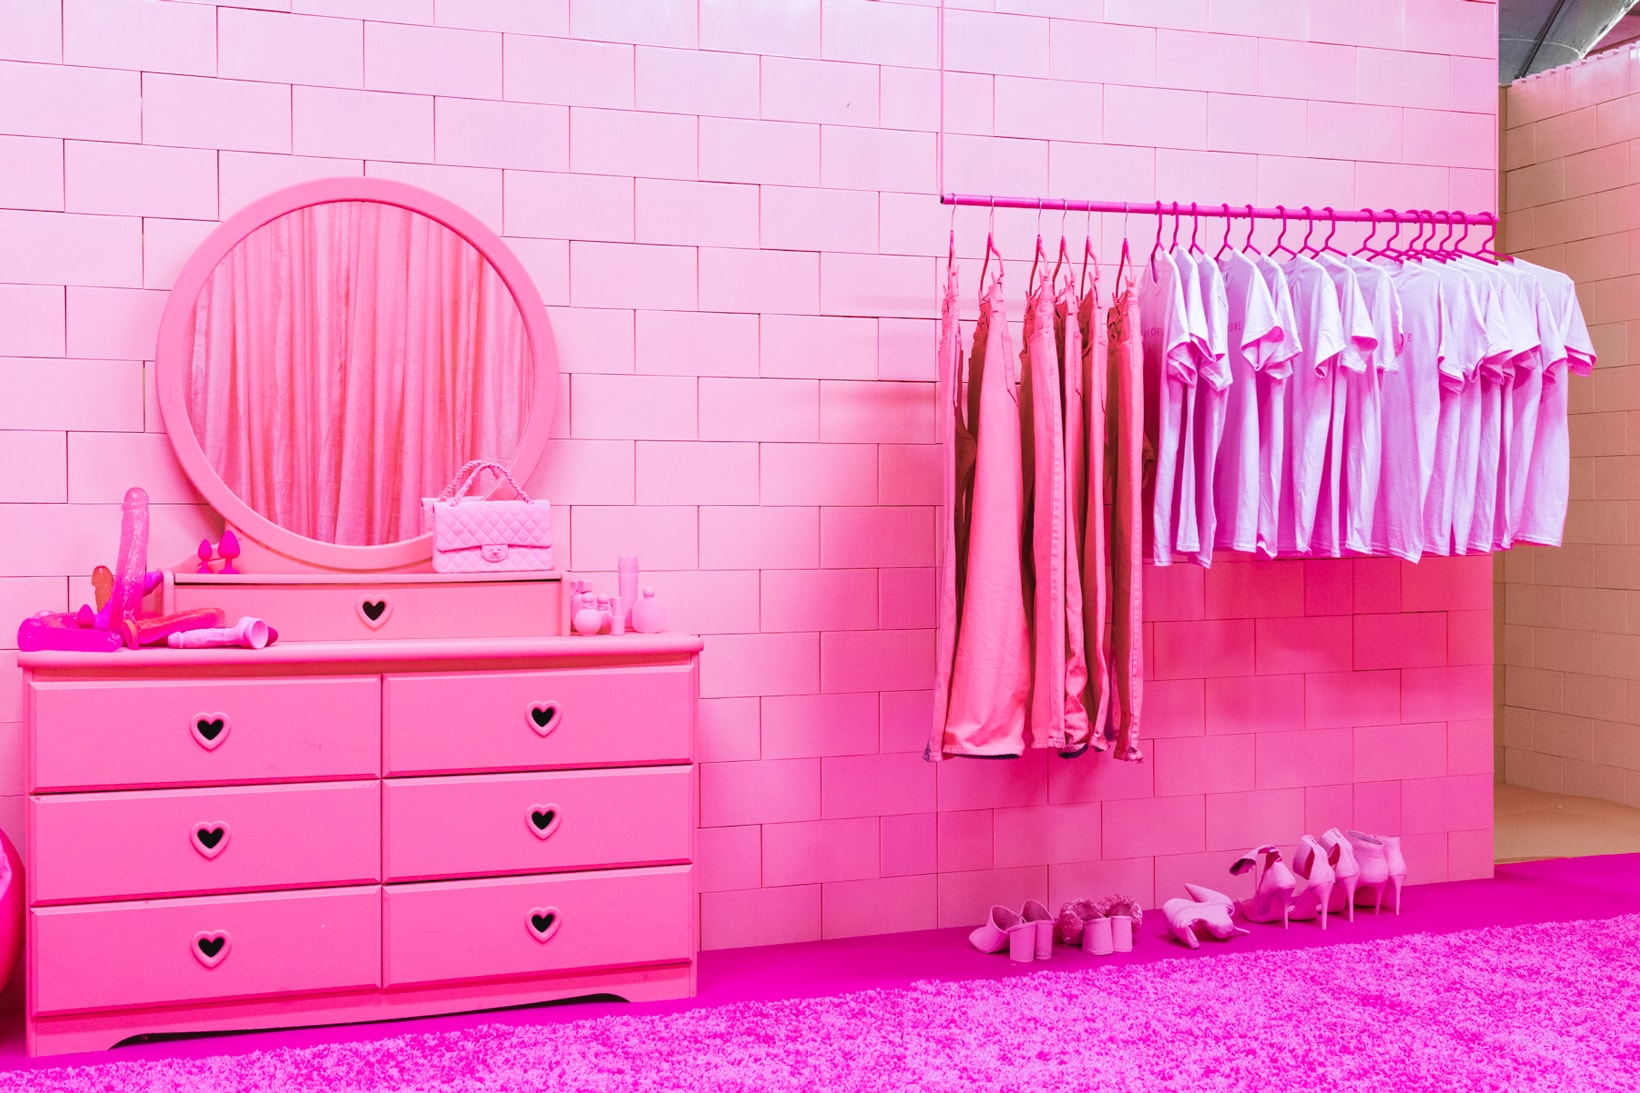 CJ Hendry Monochrome Greenpoint Brooklyn Exhibit Pink Bedroom